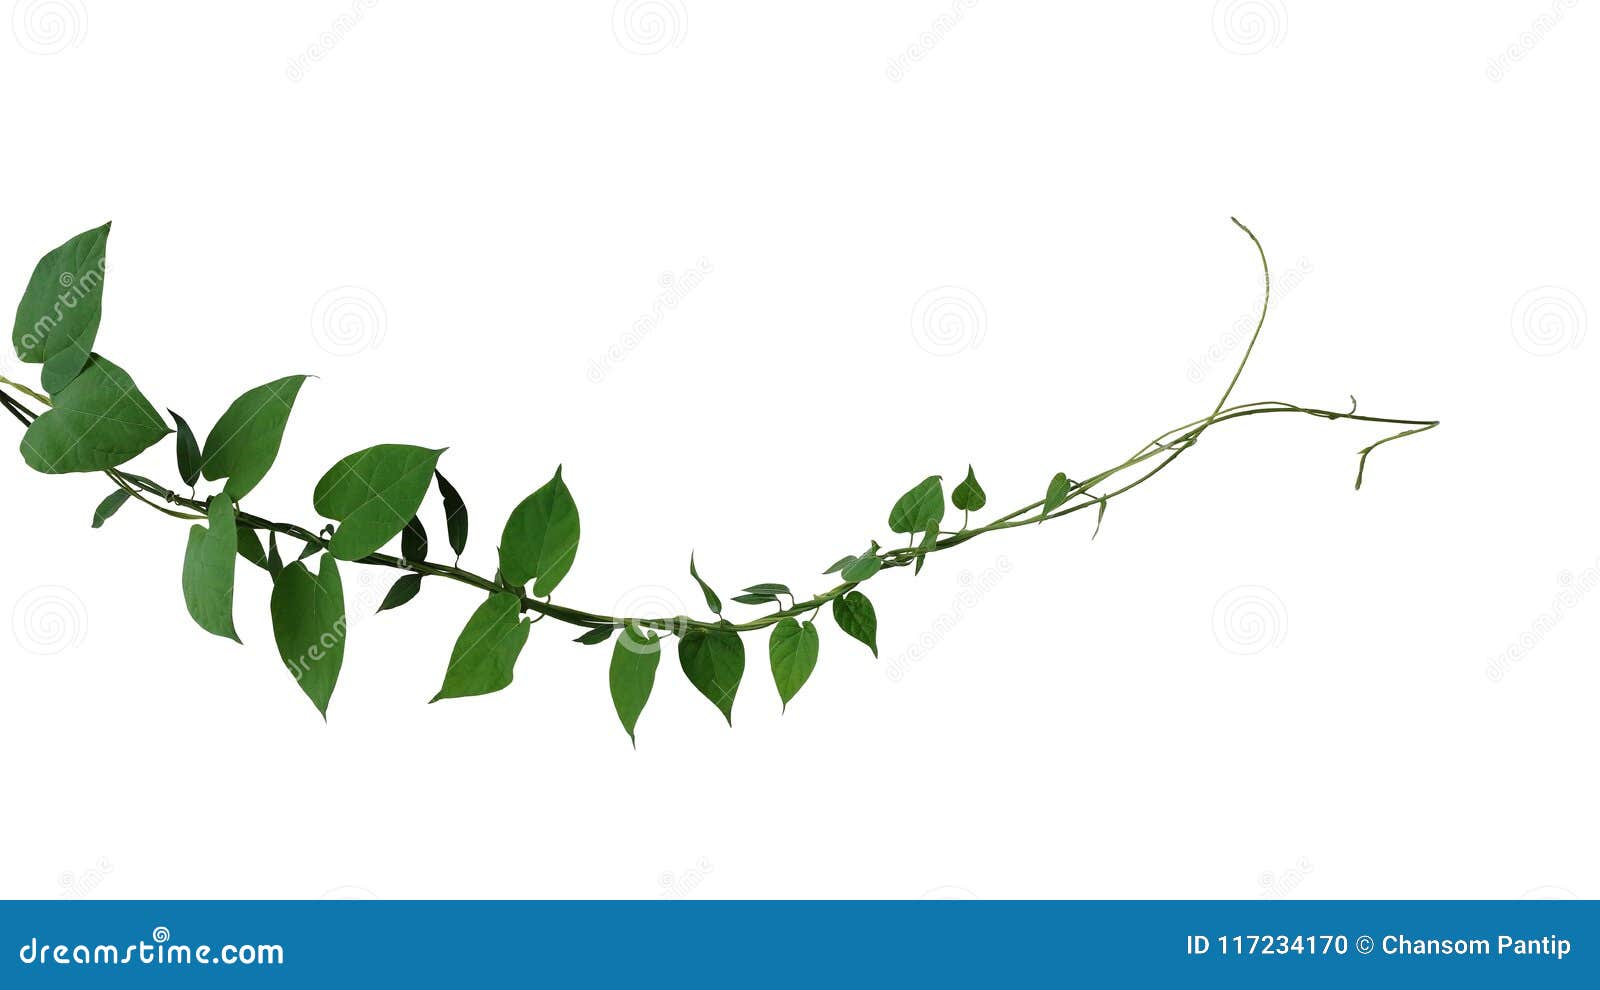 heart d dark green leaf twisted jungle vines liana climbing